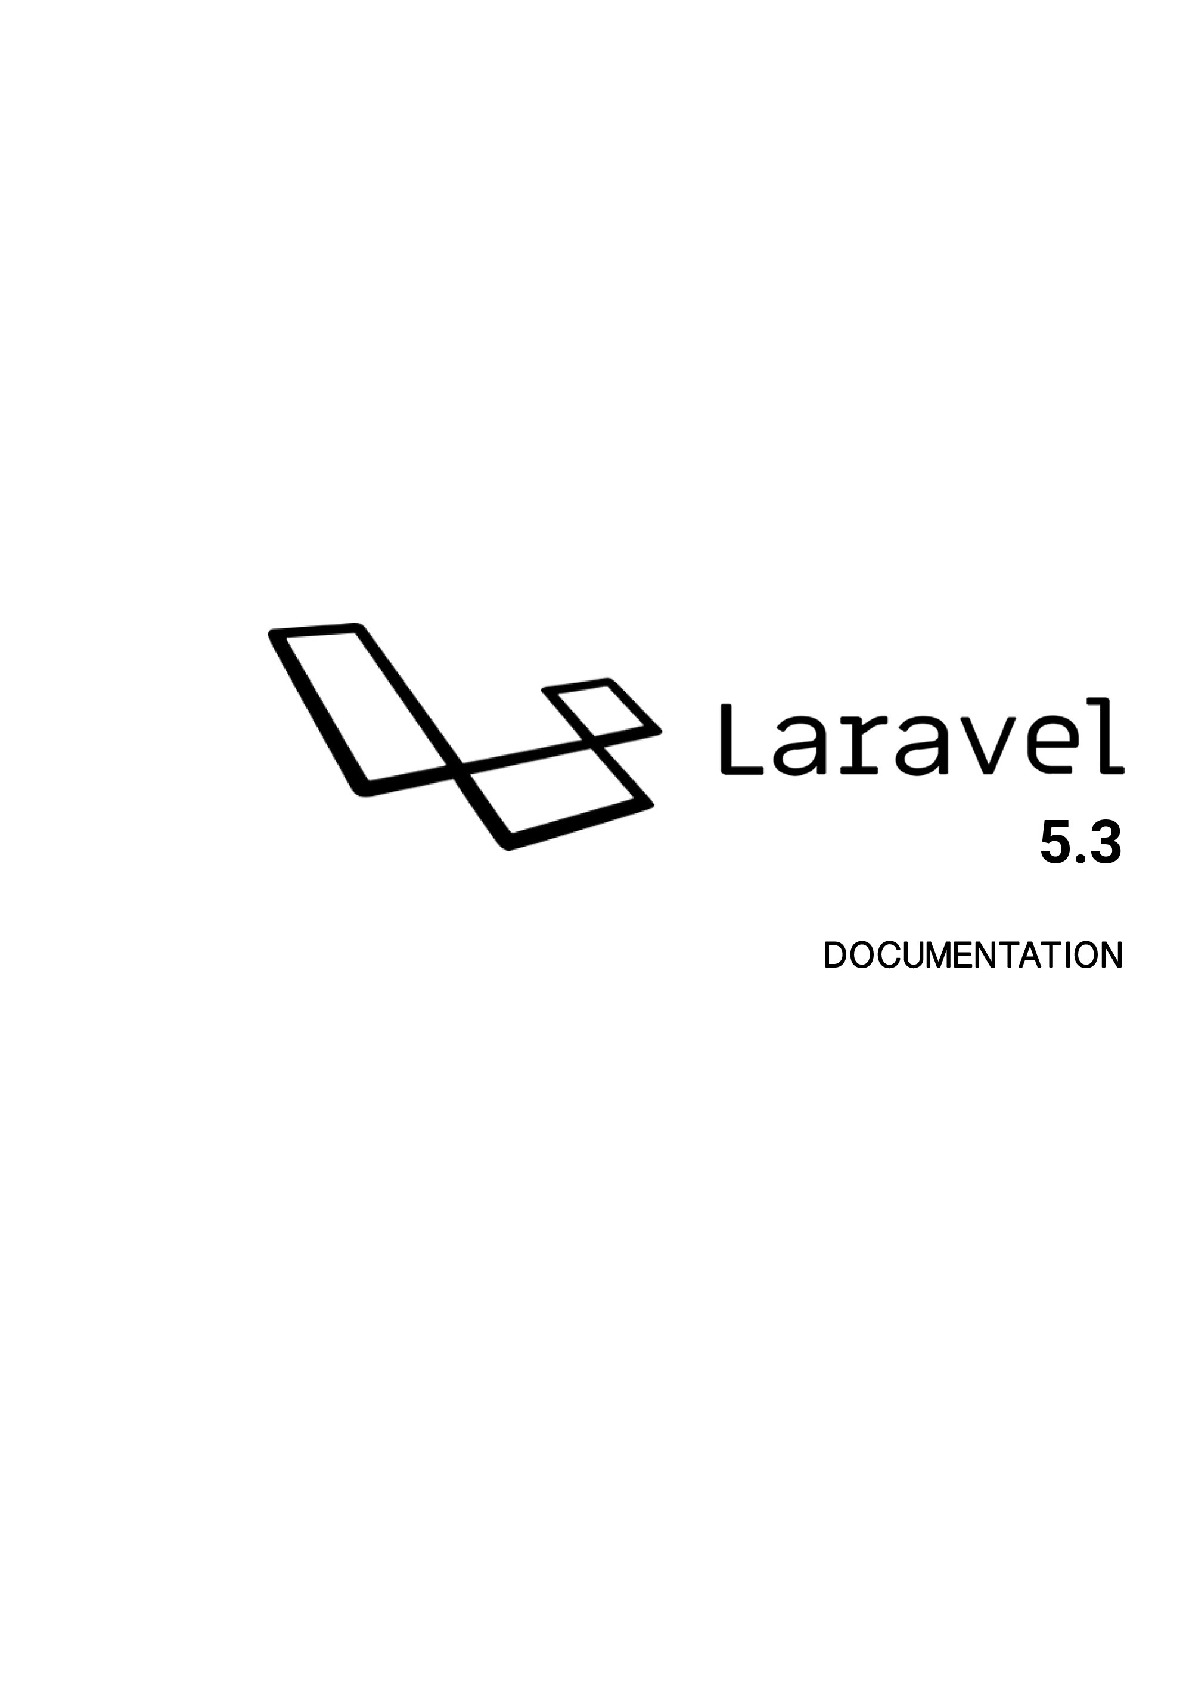 laravel-docs-5.3